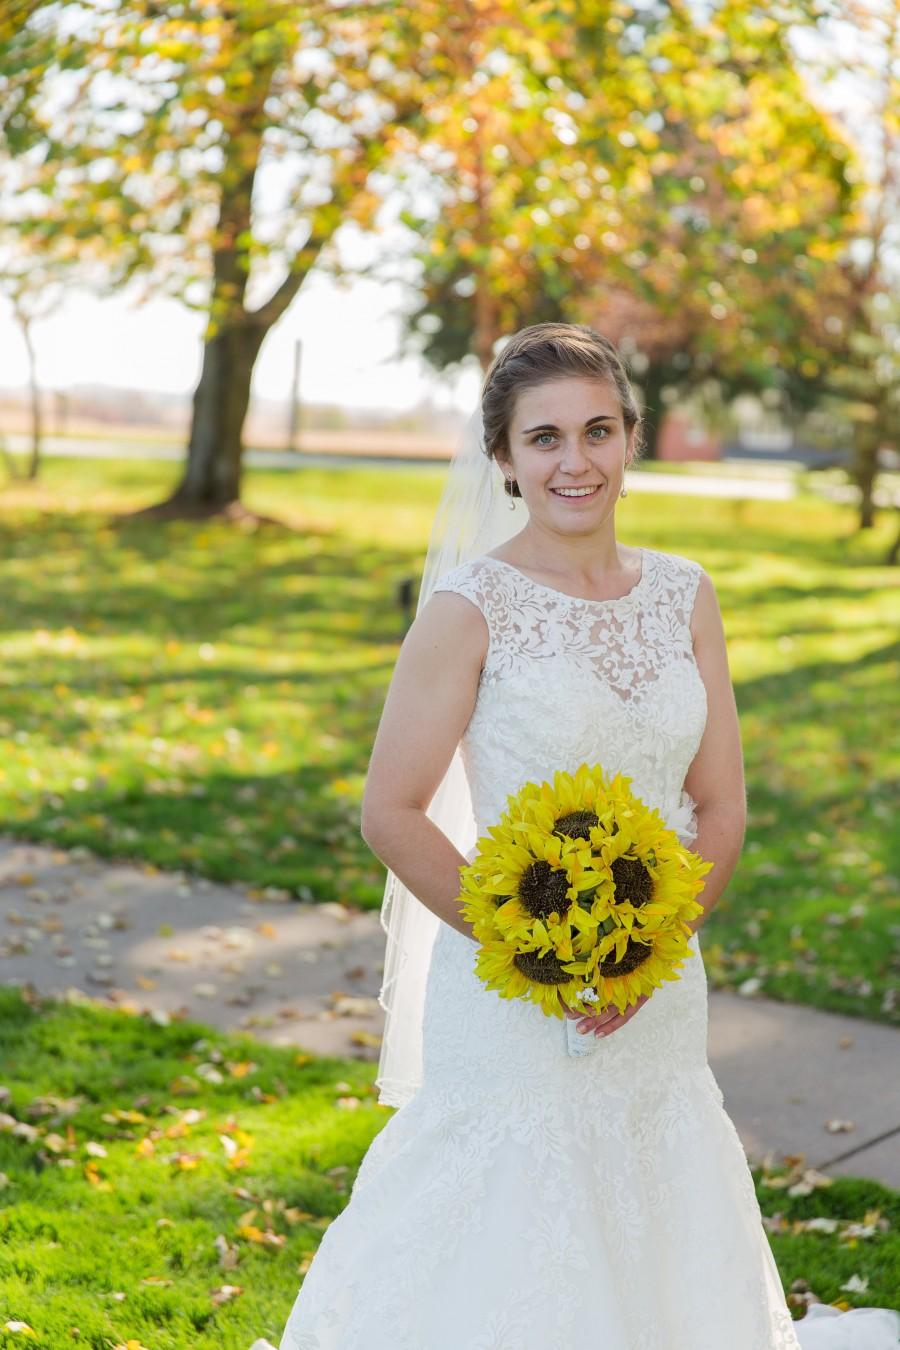 Wedding - Sunflower bridal bouquet! Wedding bouquet, bride bouquet, bouquet for wedding, sunflower, keepsake bouquet, sunflowers